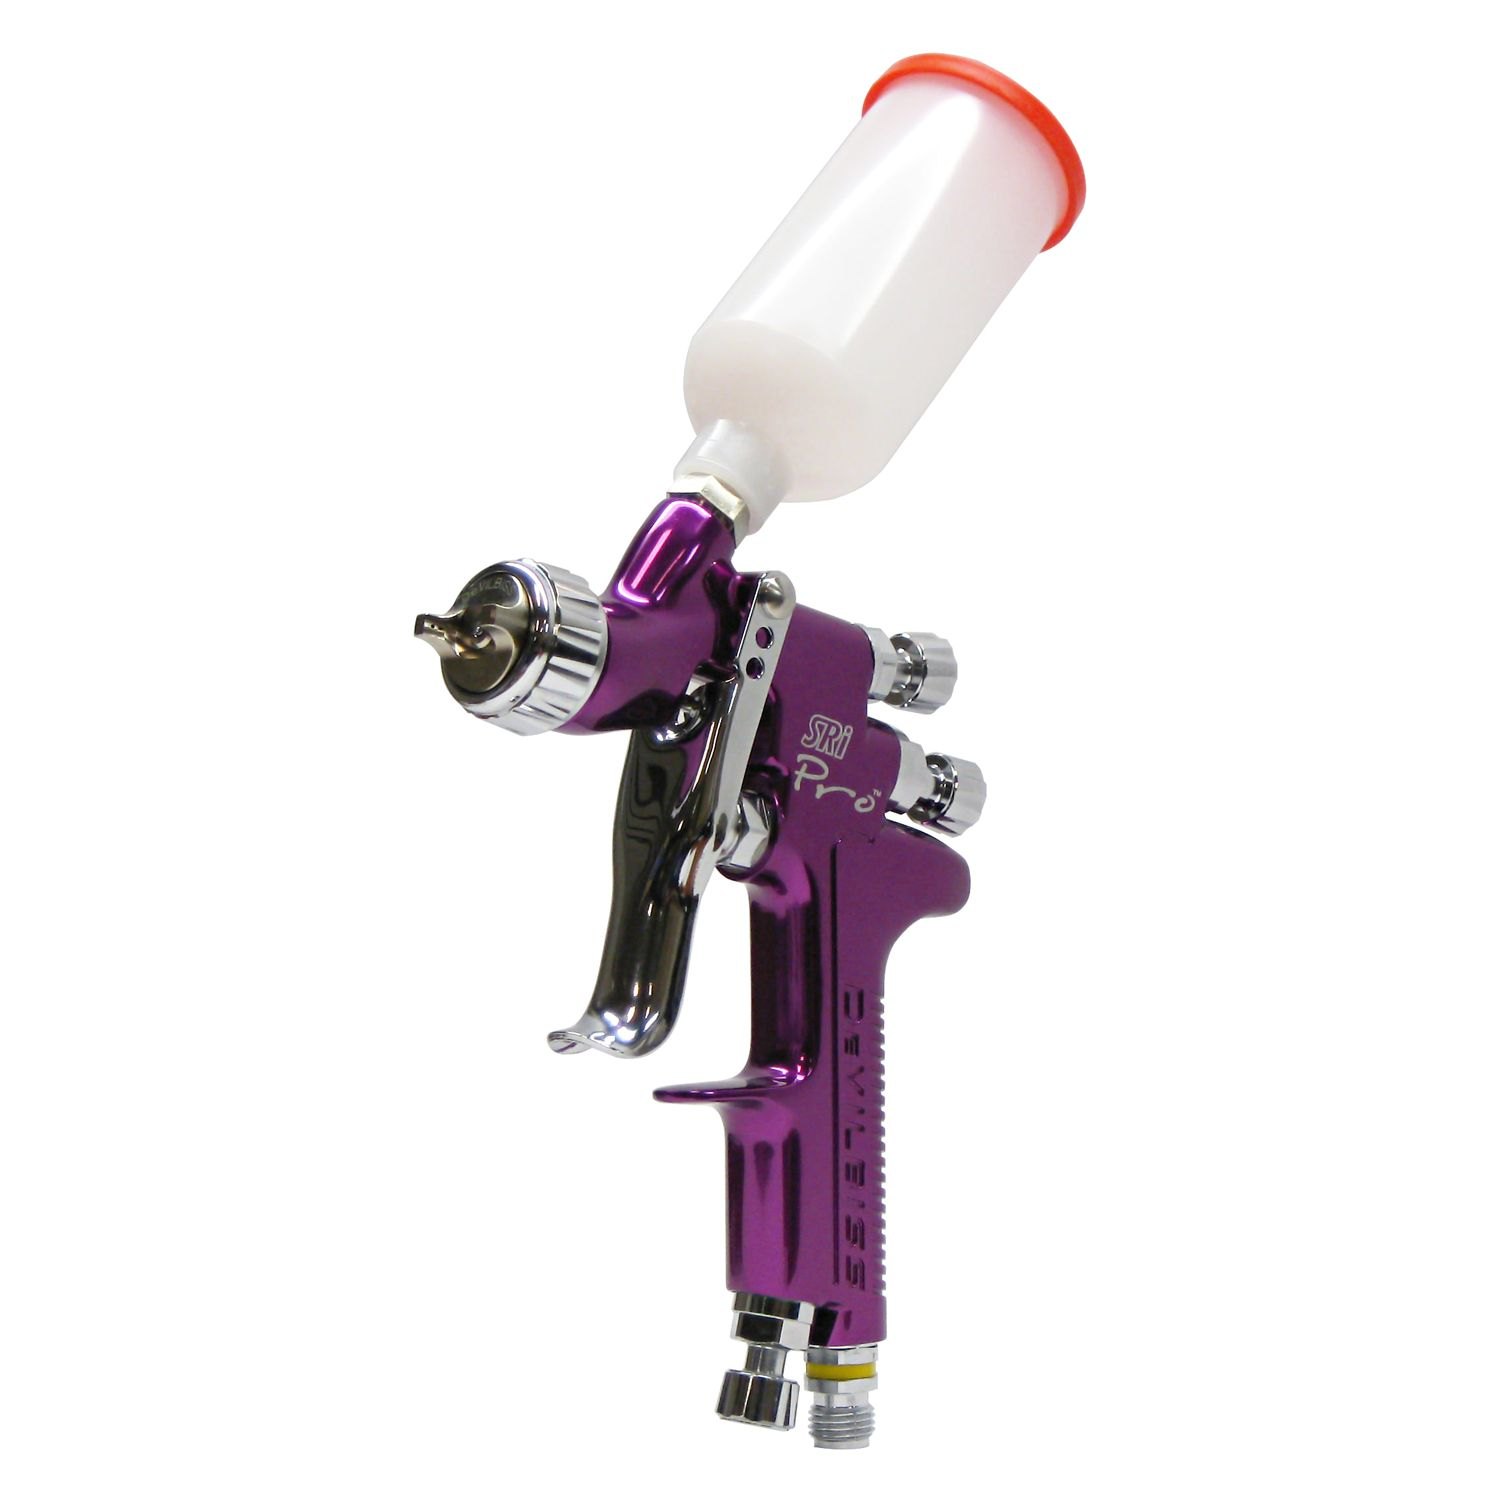 MINI Repair Gun SRi Pro 1.2mm Gravity Feed HVLP Paint Sprayer With